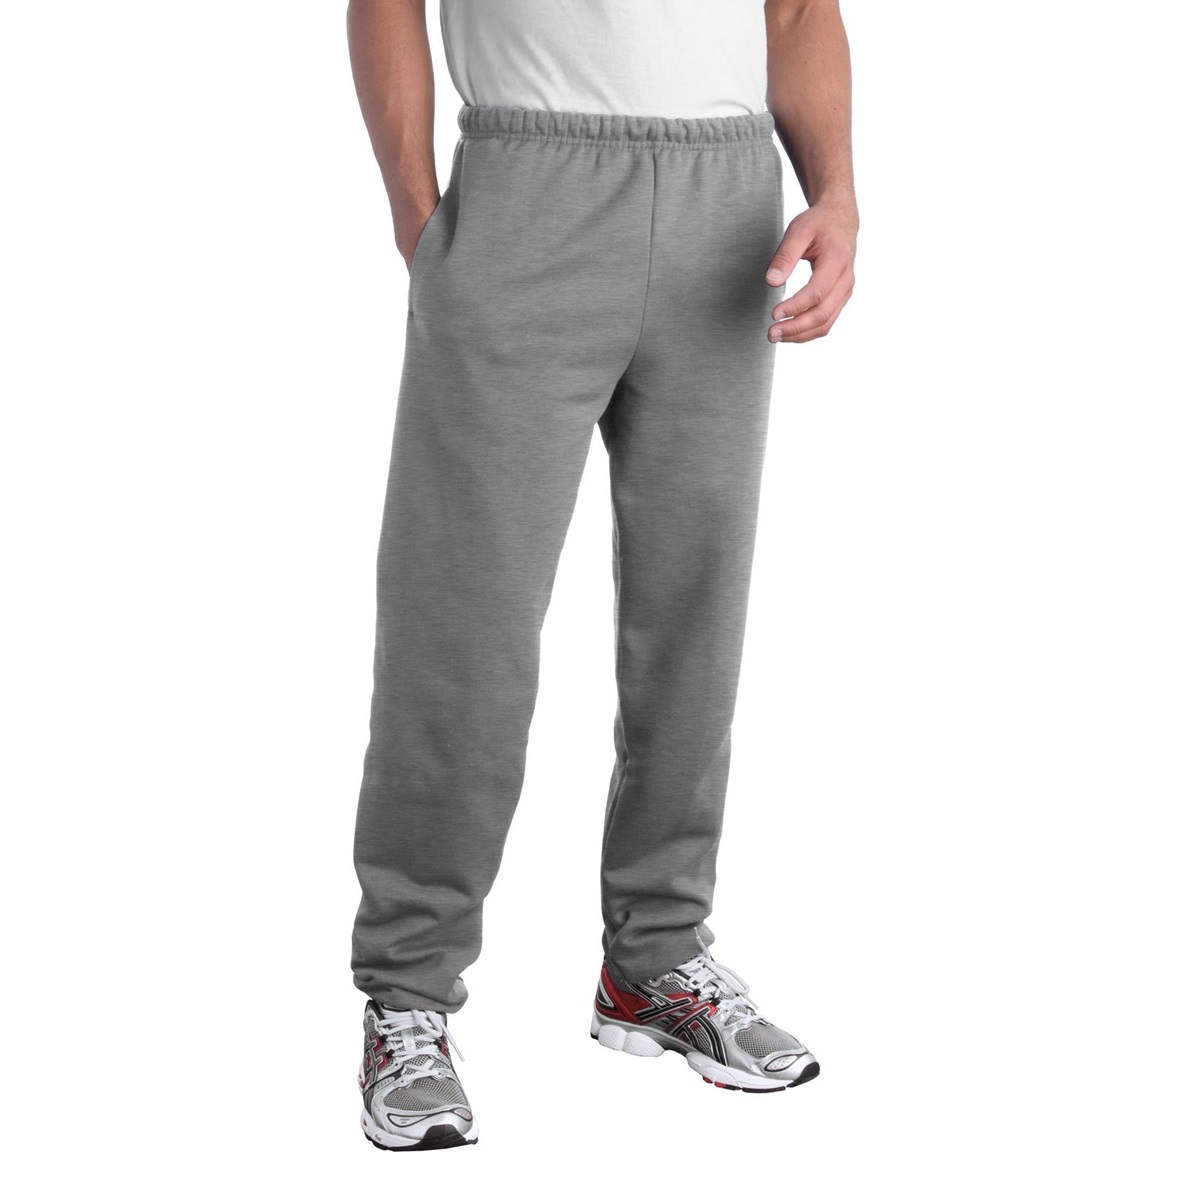 Jerzees 4850MP Super Sweats Sweatpants with Pockets - Oxford ...